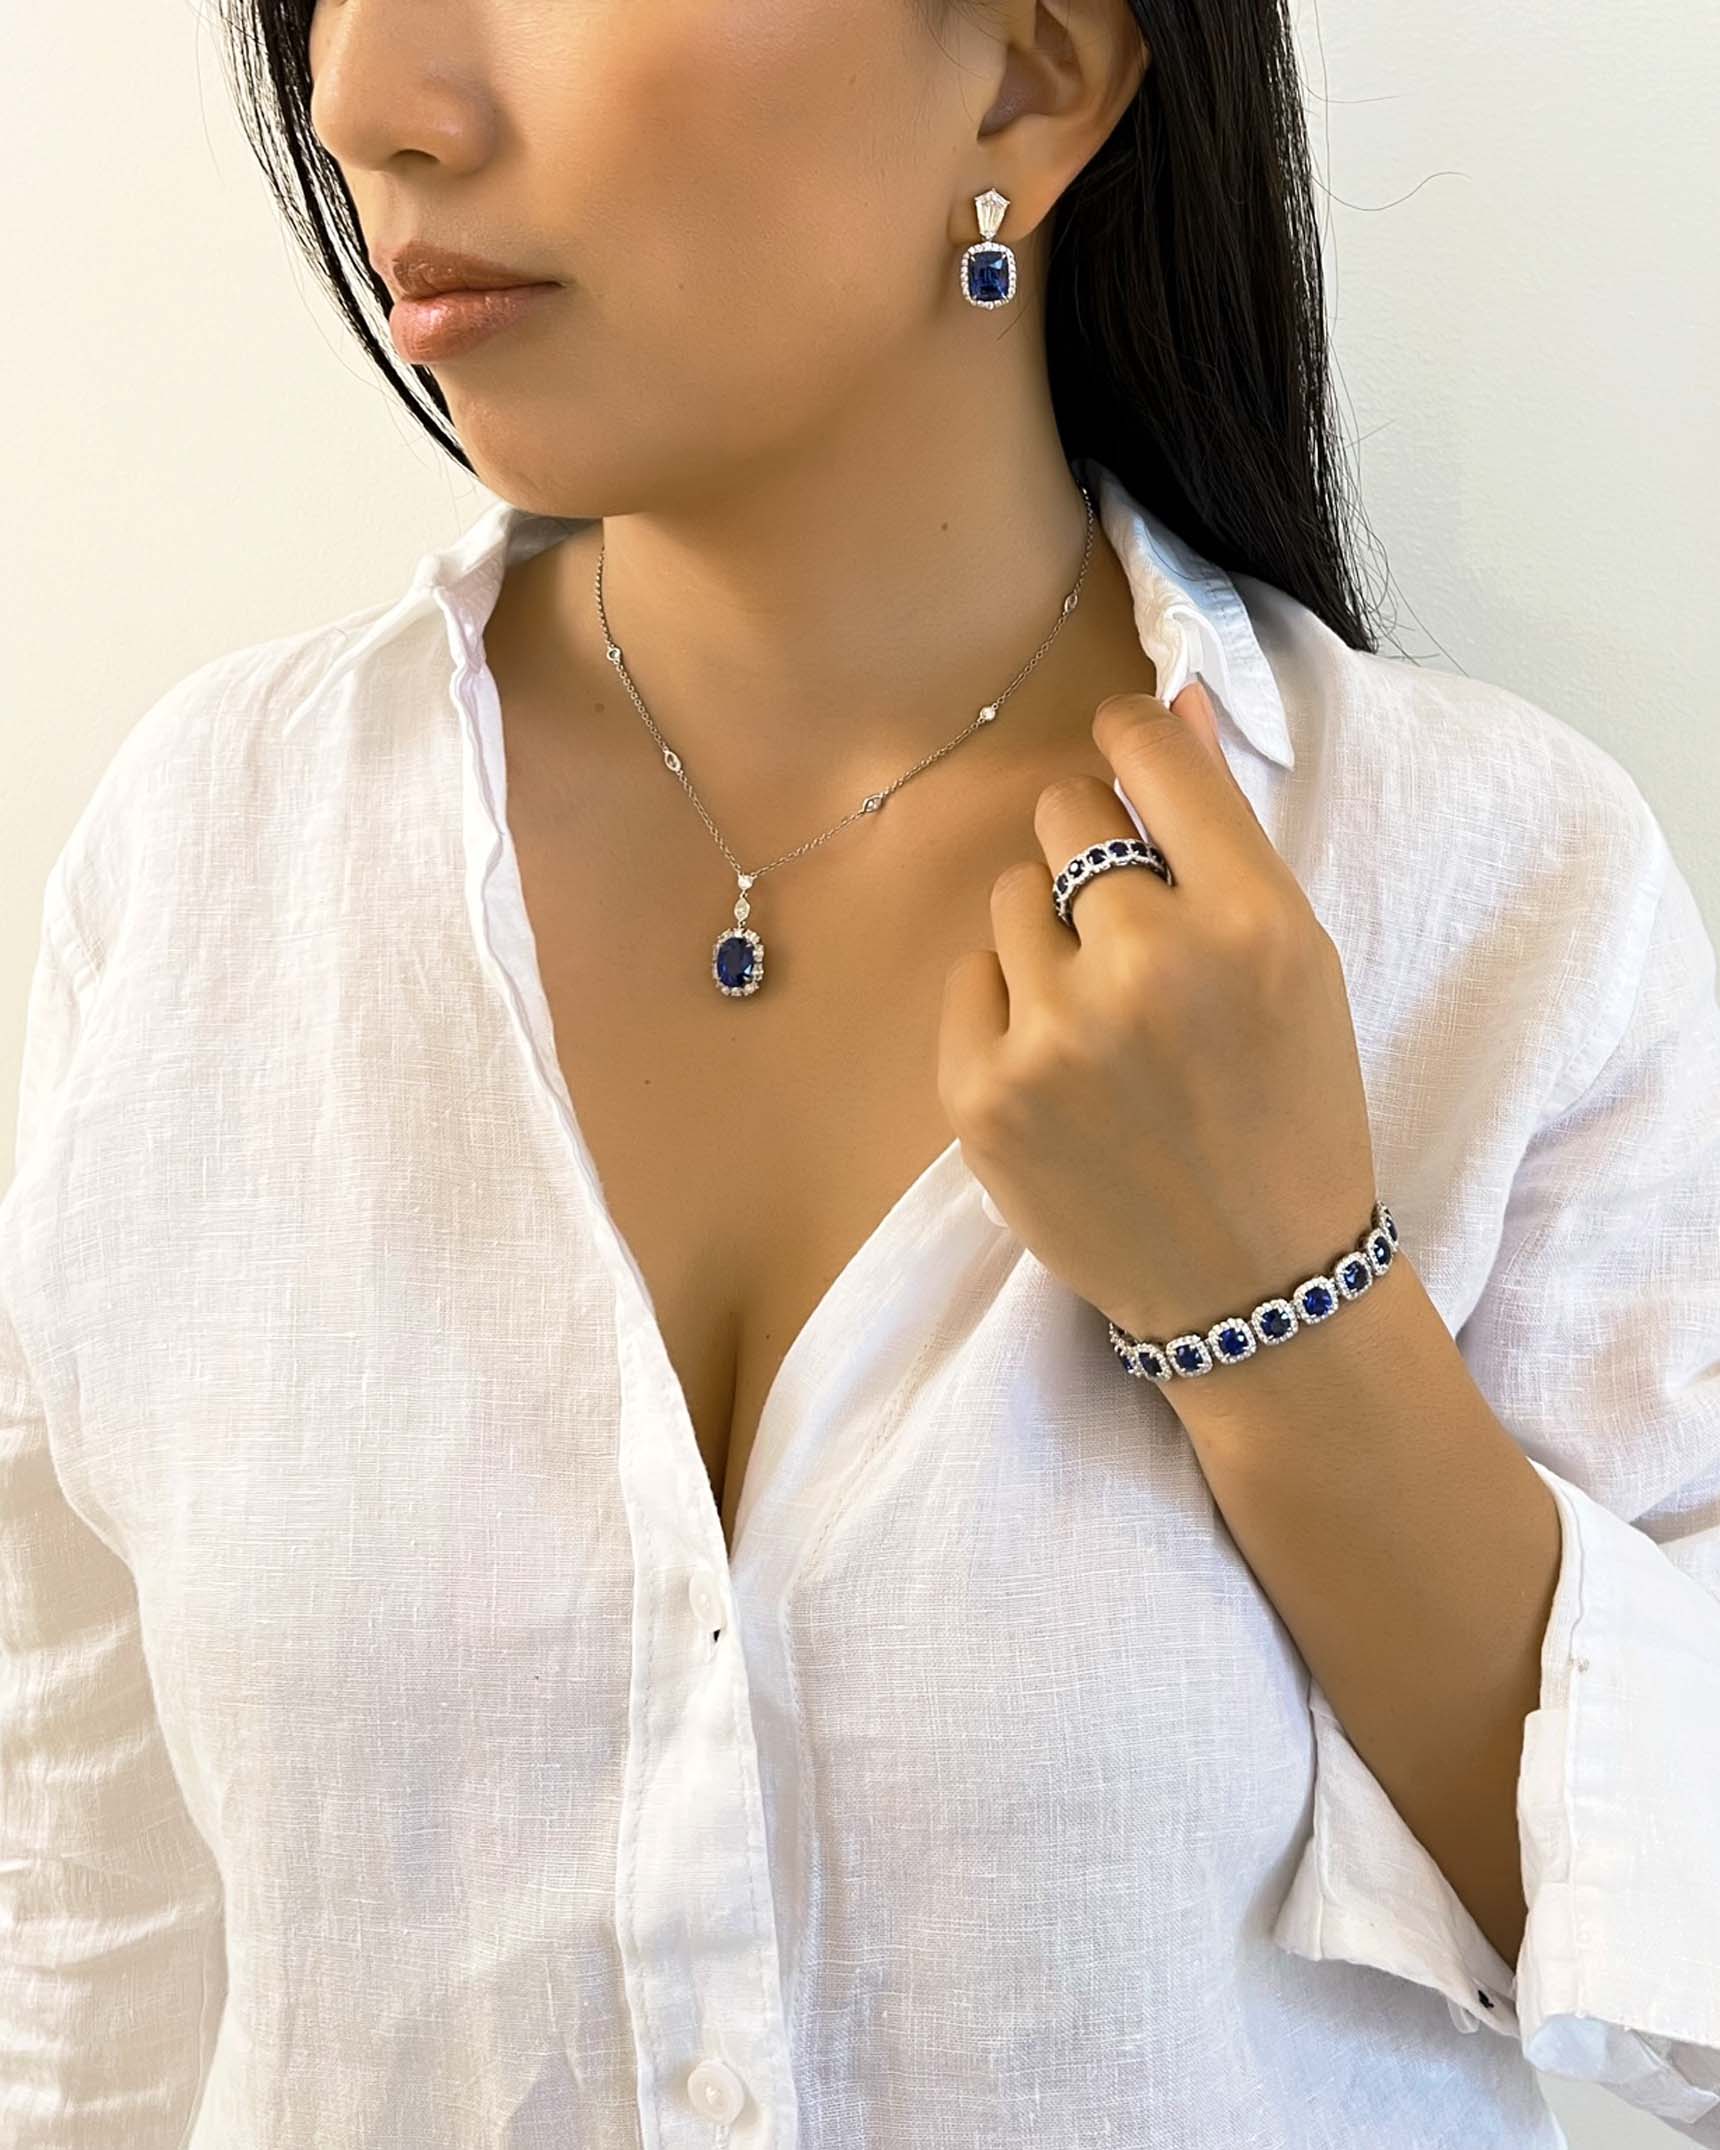 Blue Sapphire and Diamond Earrings_Necklace_Ring and Bracelet ECDKK02482 – PNMTG02936 – RACDS00810 – BCDKK02286